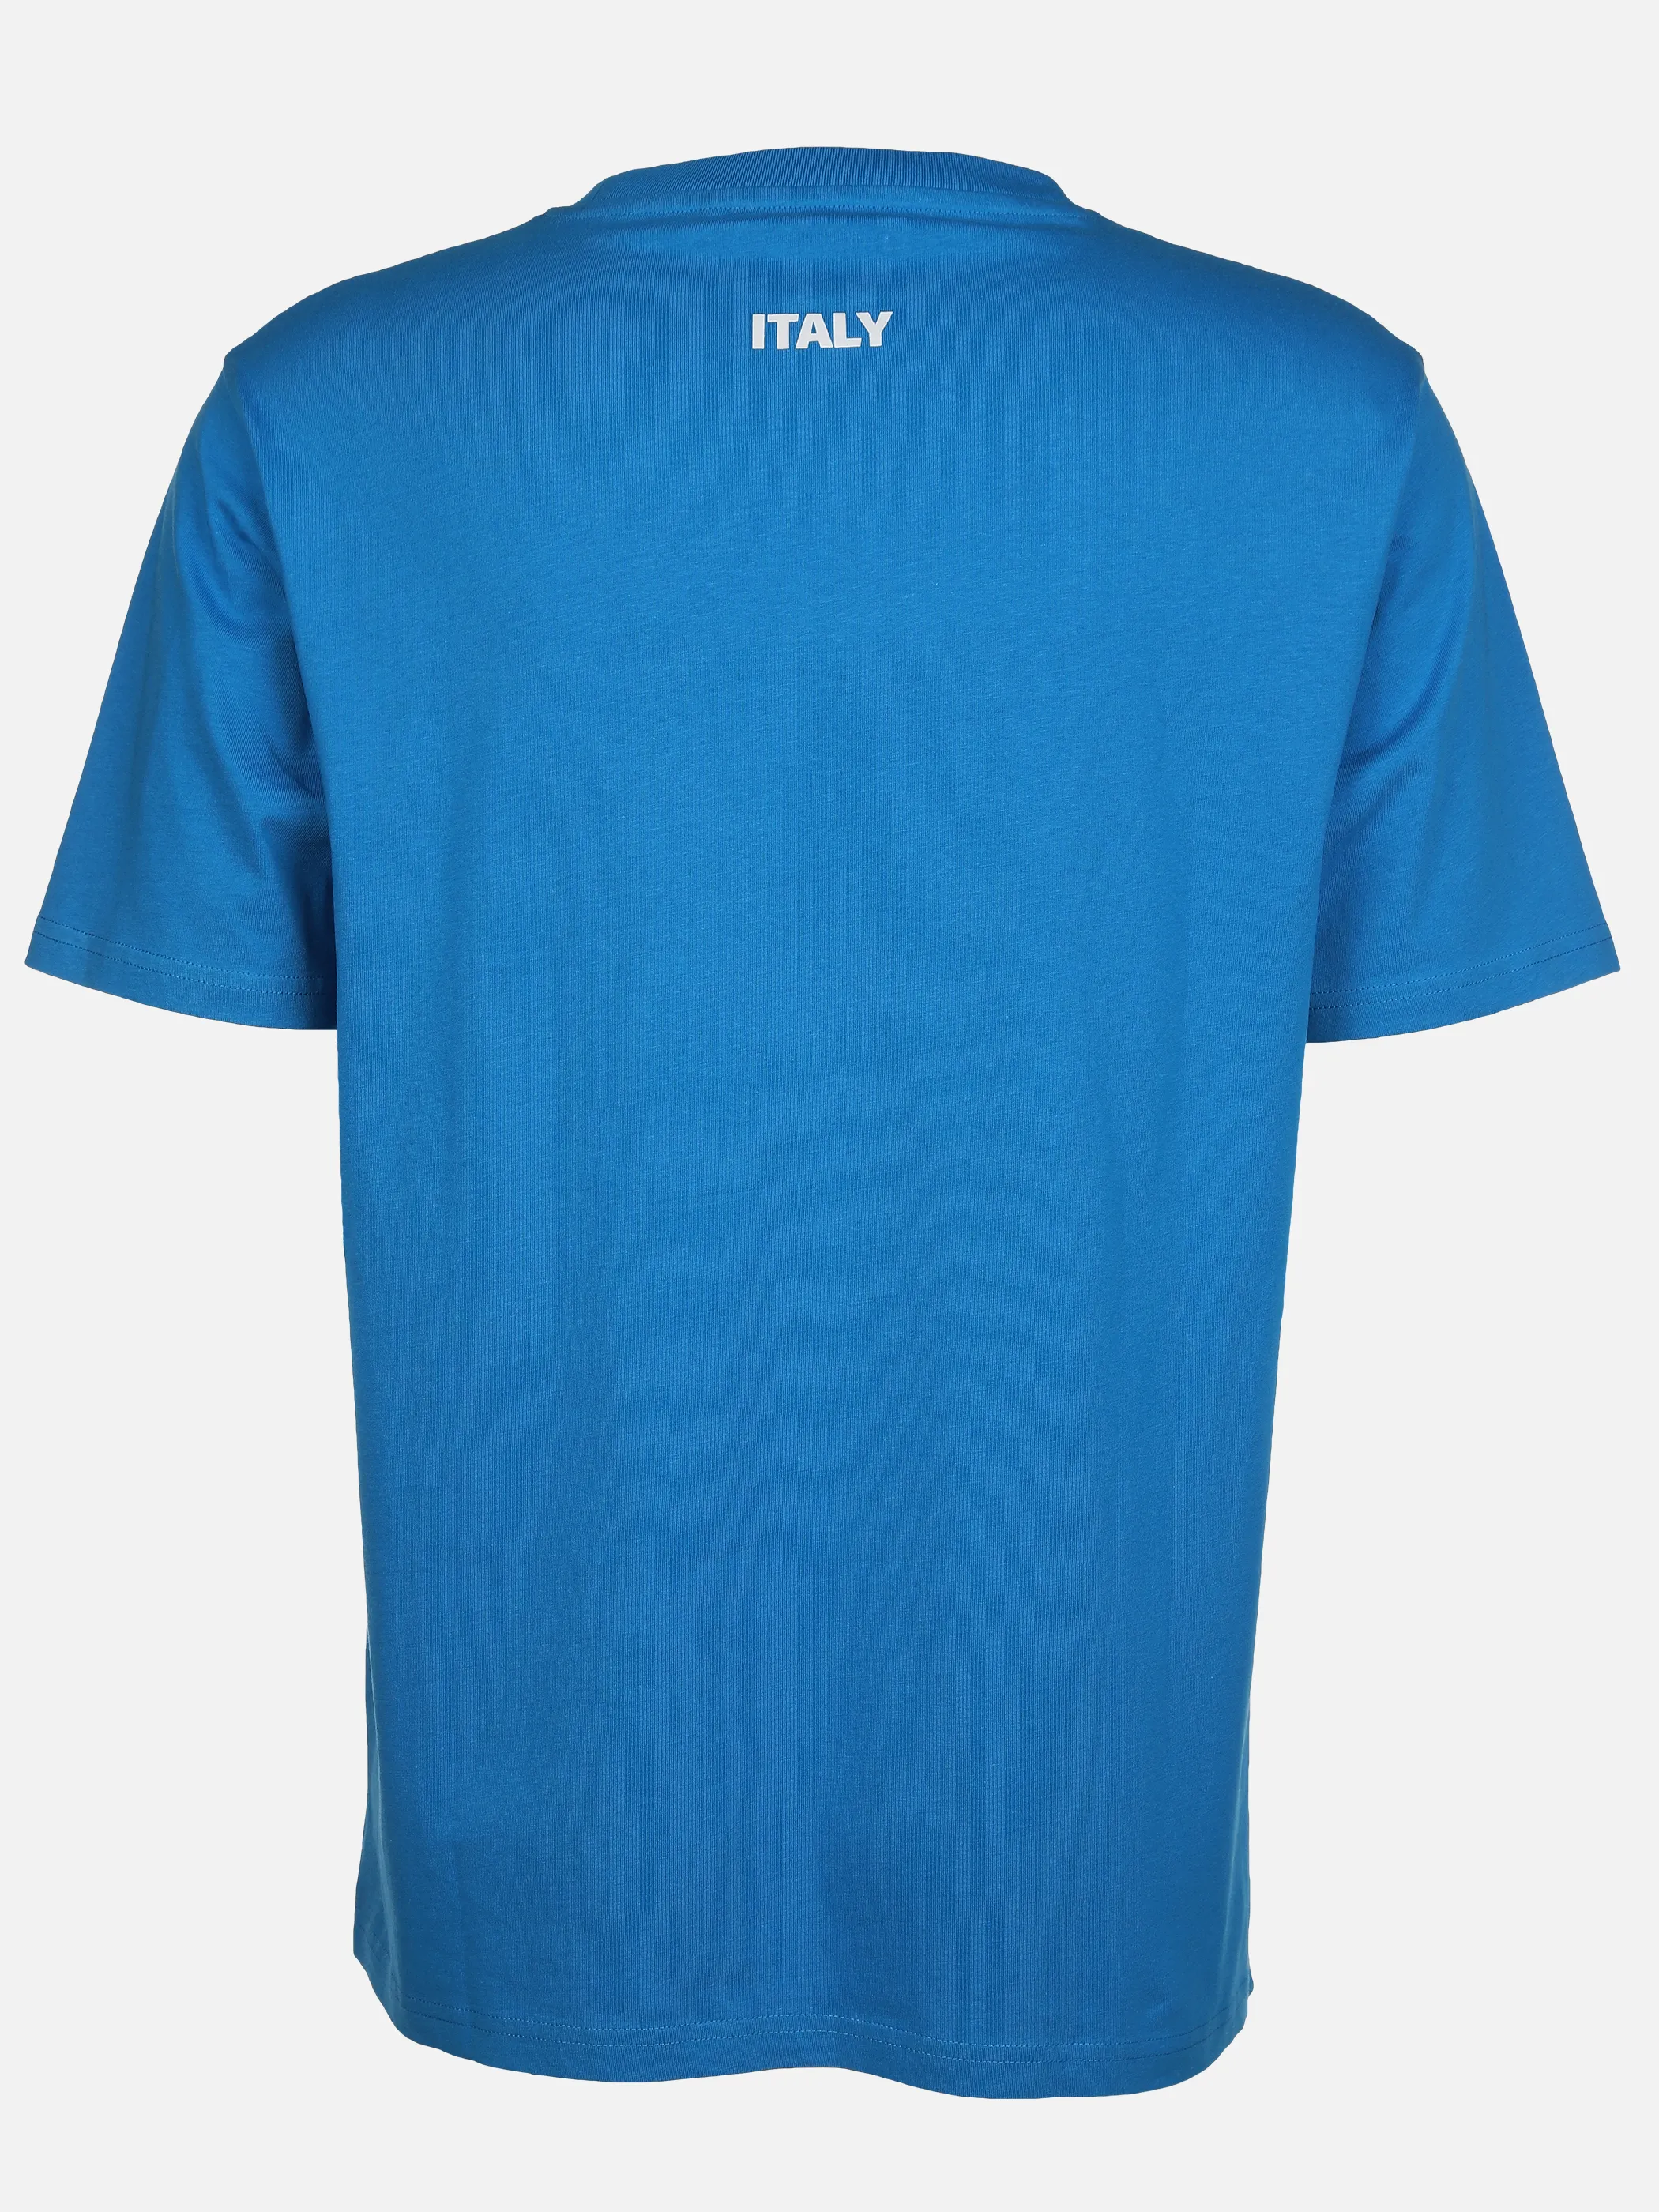 Grinario Sports Unisex T-Shirt EM24 Blau 889225 BLUE 2